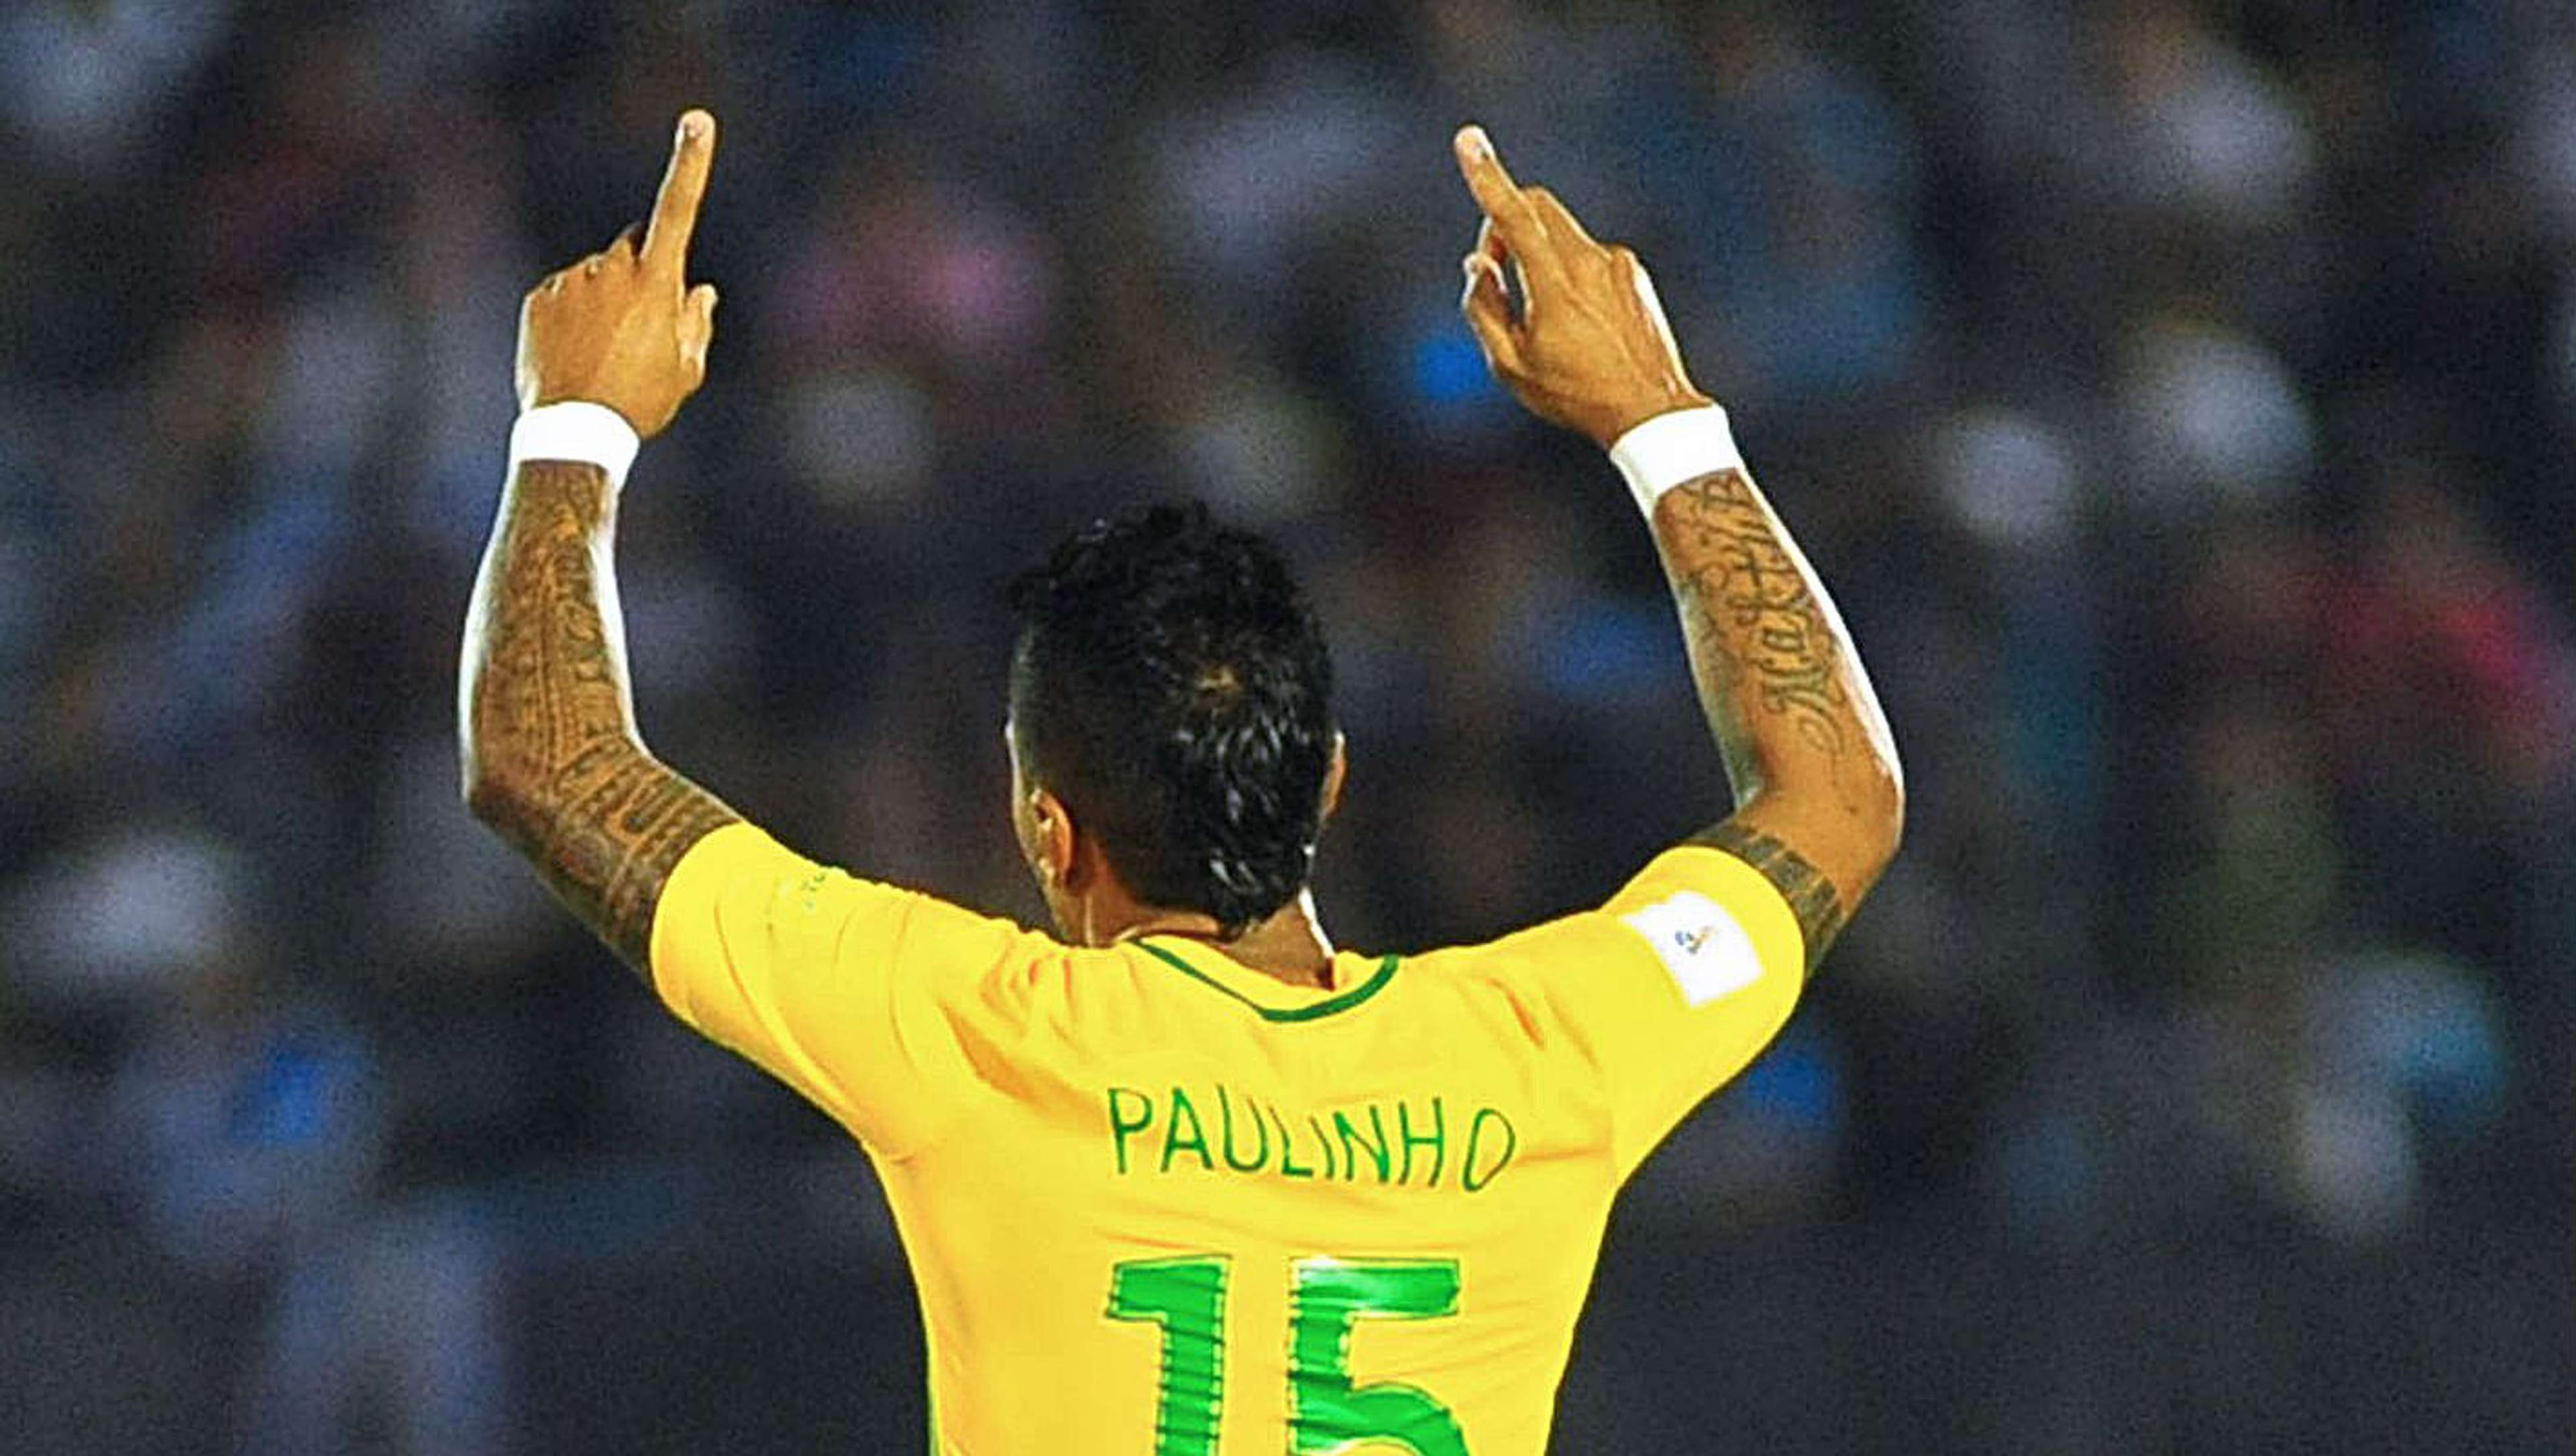 Paulinho Brazil